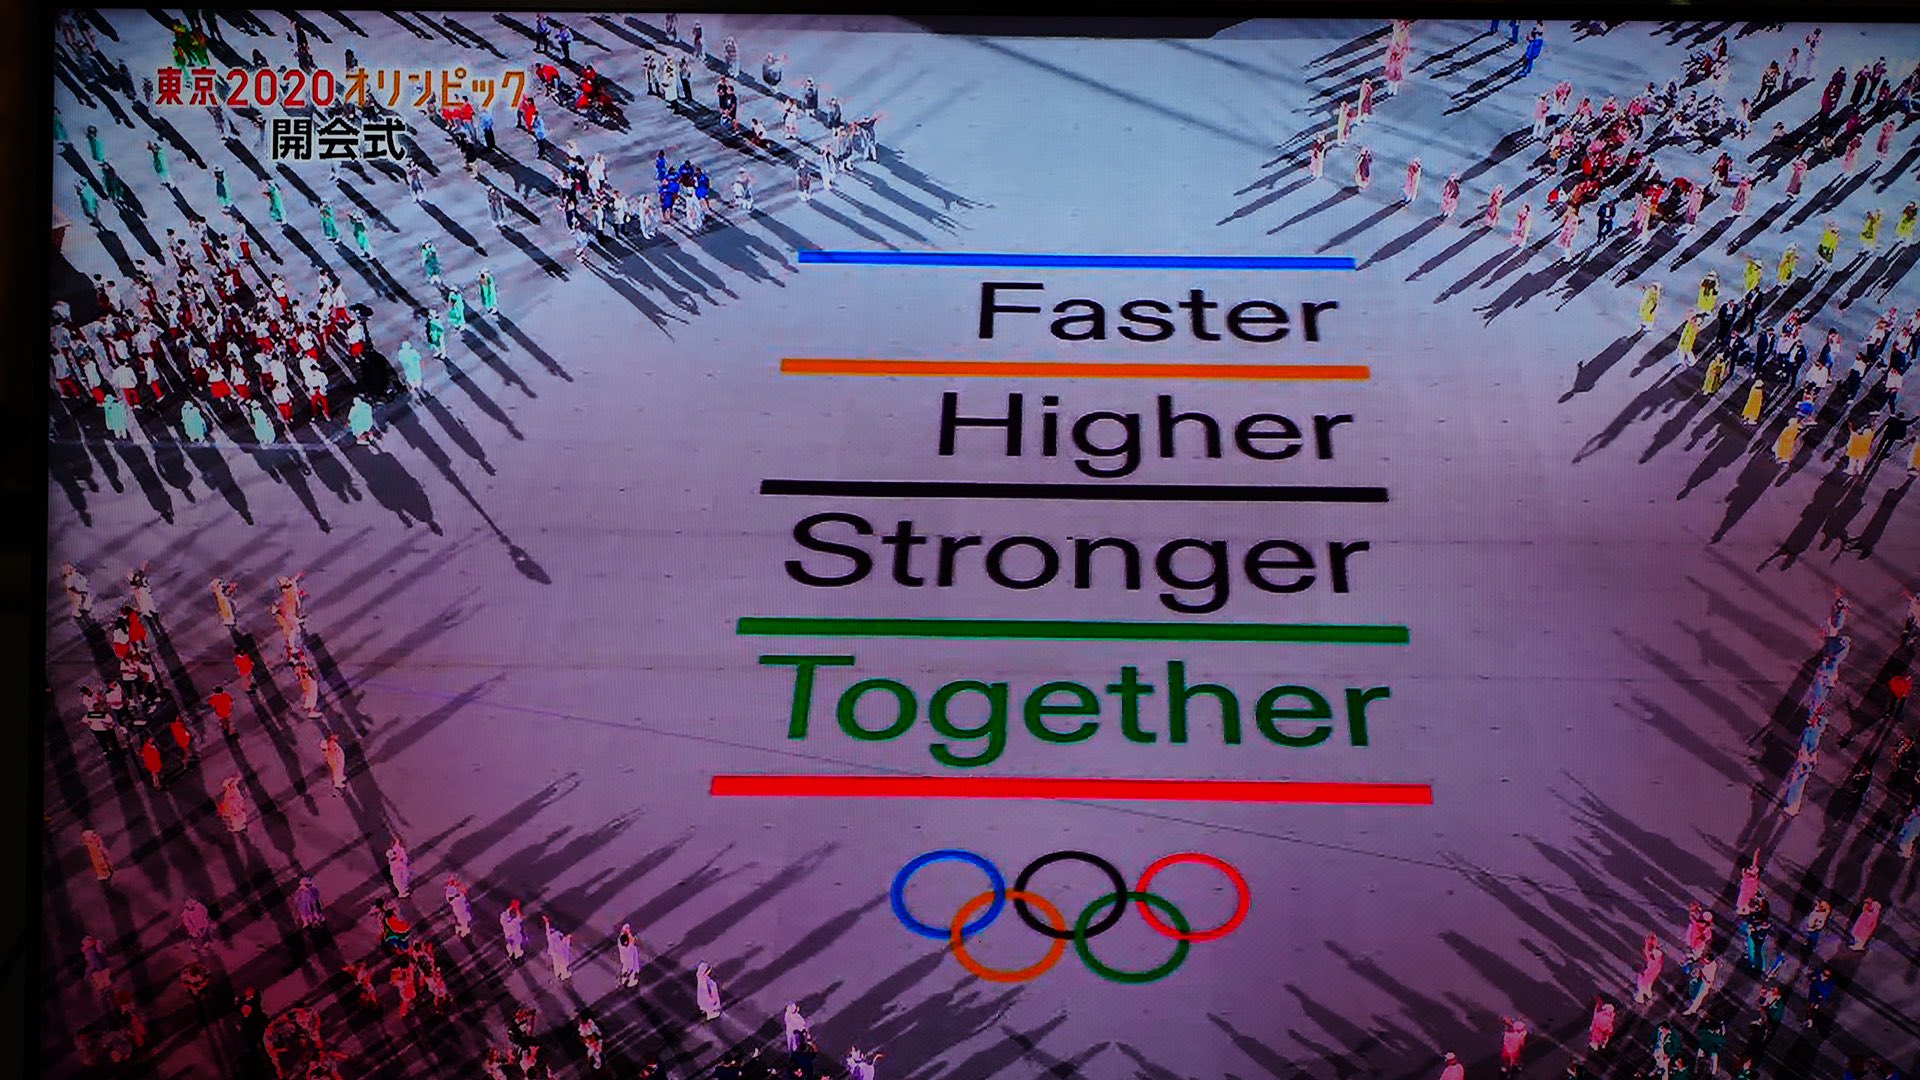 James 東京オリンピック 開会式 オリンピックのモットー より速く より高く より強く 今回は Together 共に が加わりました Sonyalpha Sel50f12gm T Co Oloi1cth0u Twitter